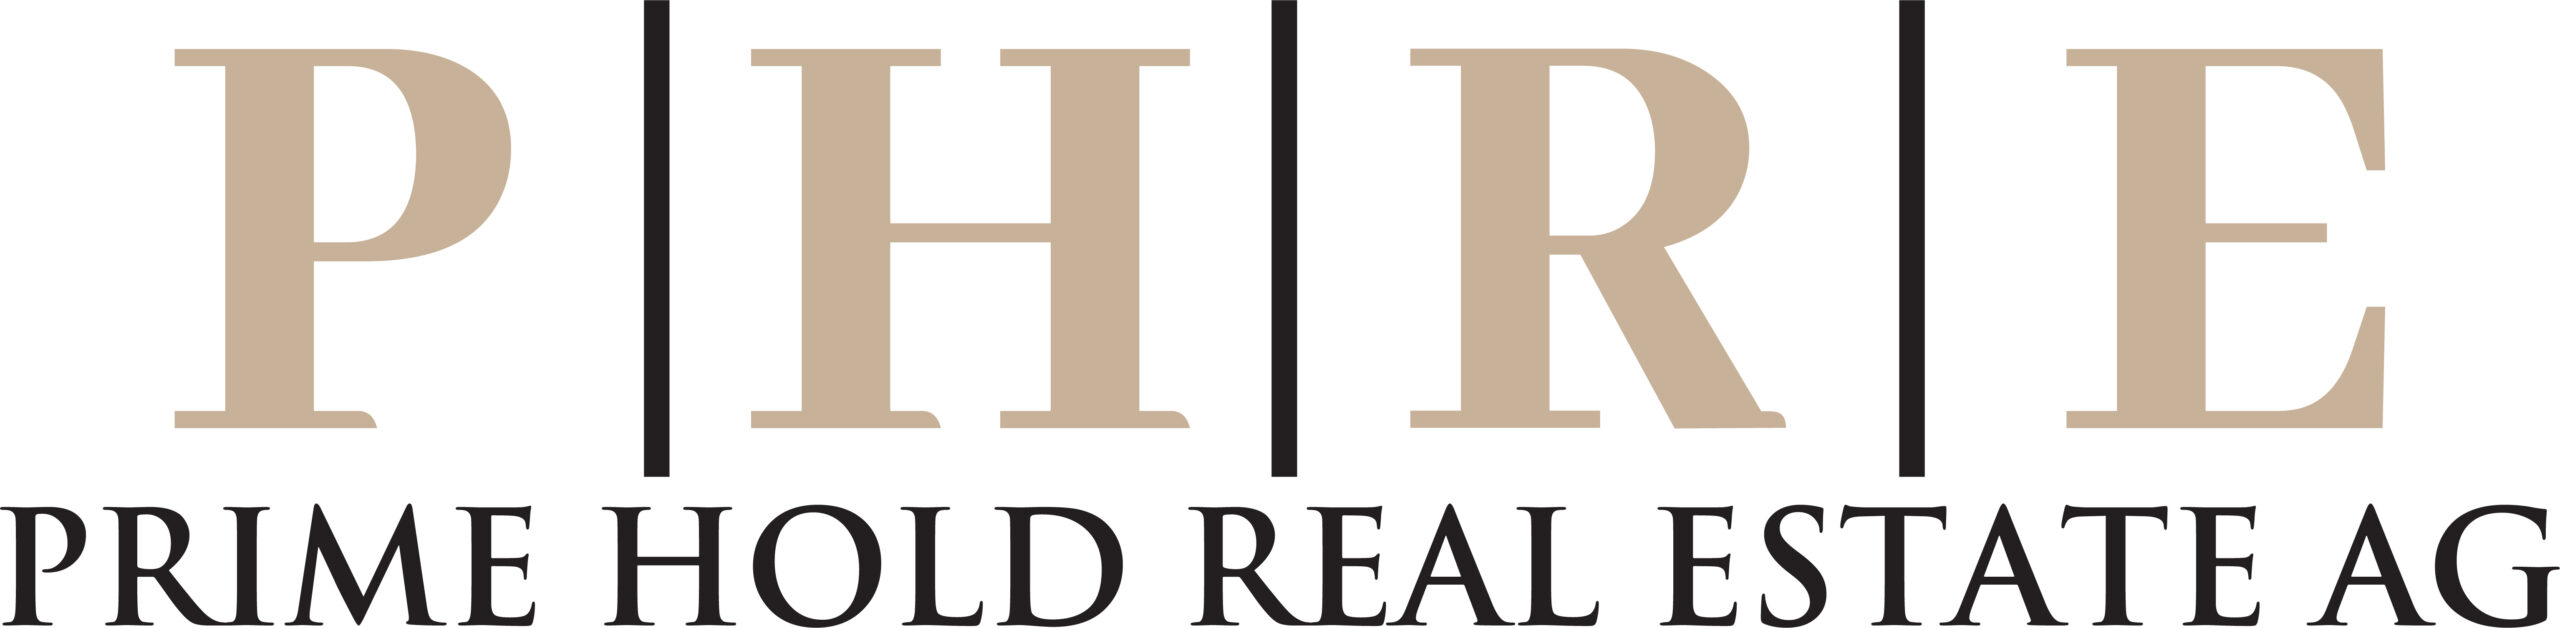 Prime Hold Real Estate